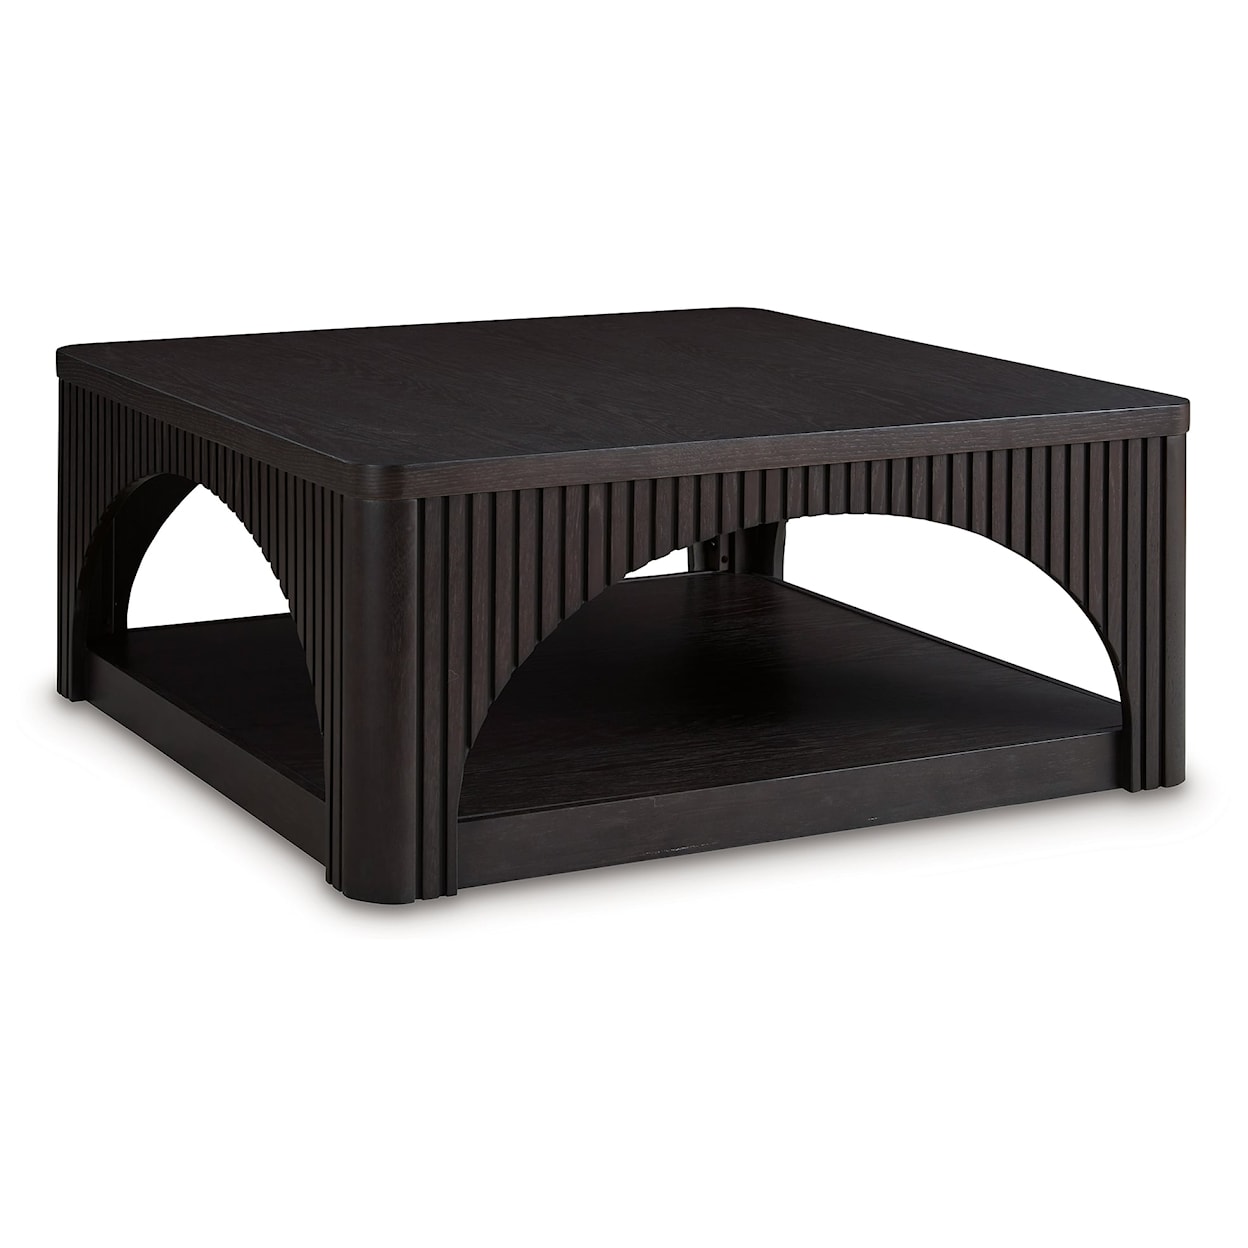 Ashley Furniture Signature Design Yellink Square Coffee Table